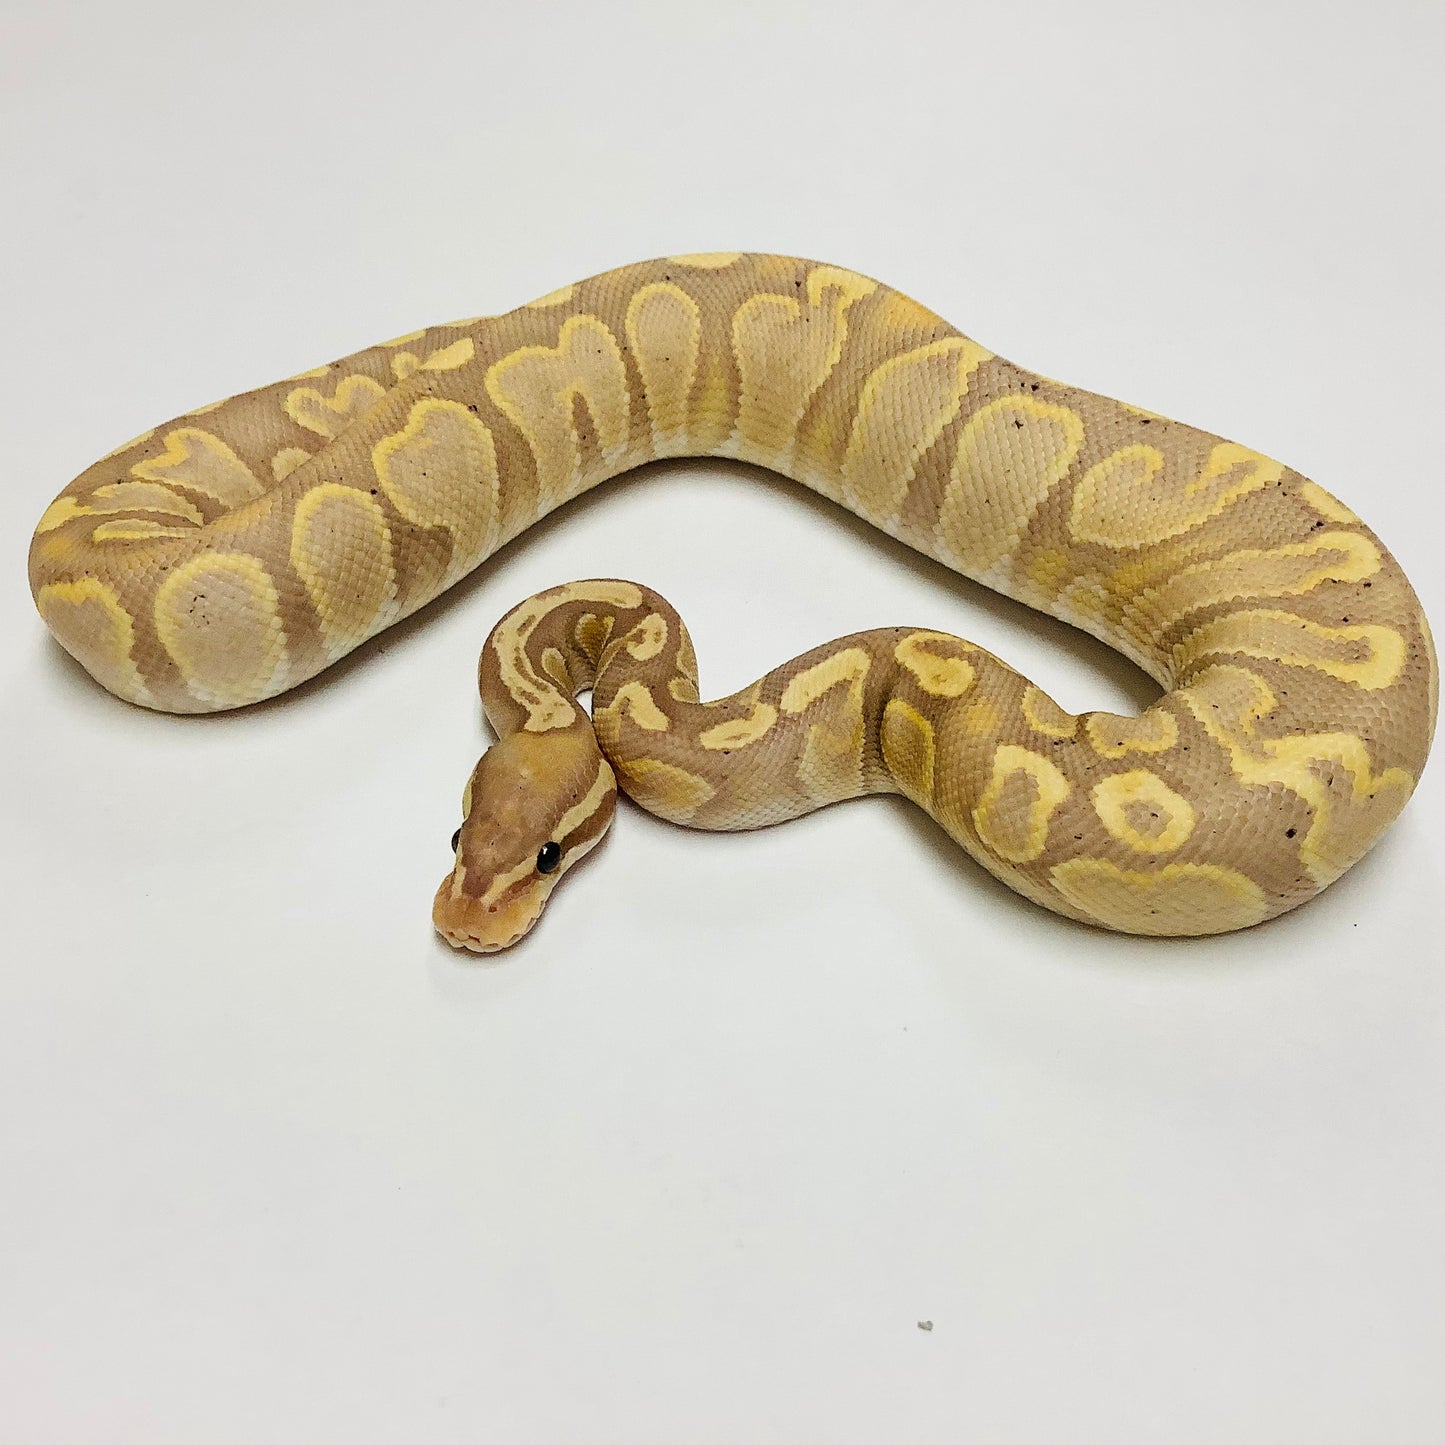 Banana Lesser GHI Ball Python - Male #2021M02-1